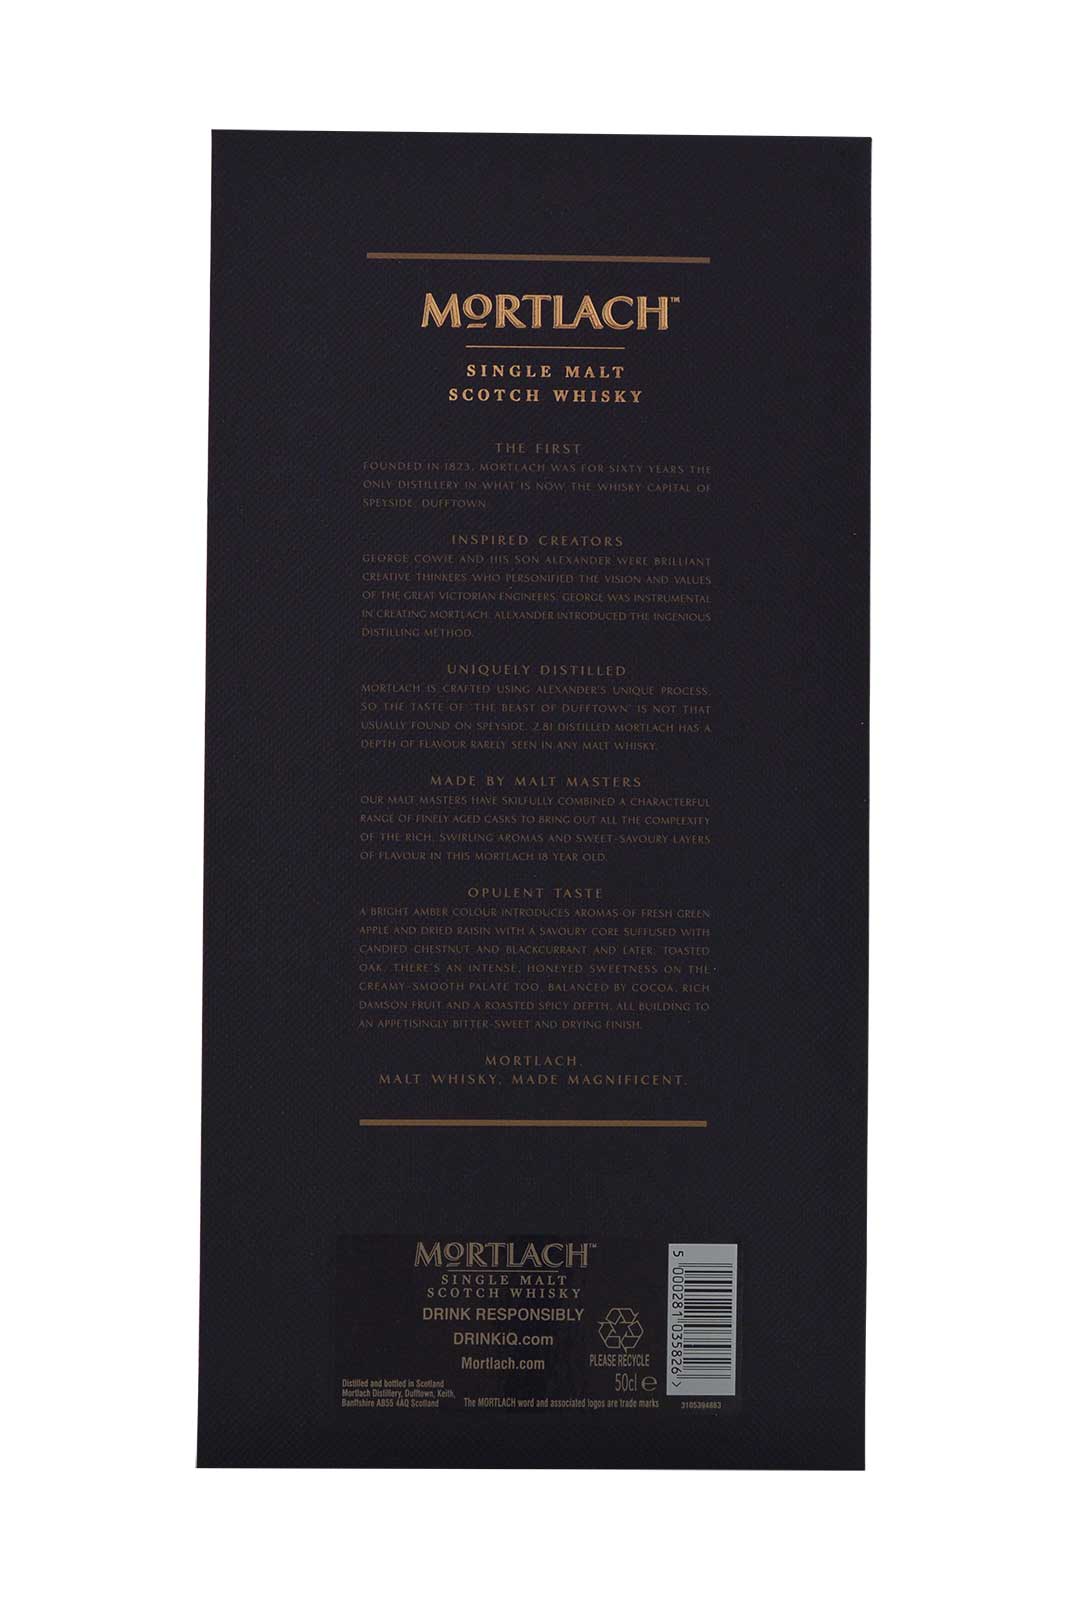 Mortlach 18 Year Old Single Malt Scotch Whisky (2014 Release)